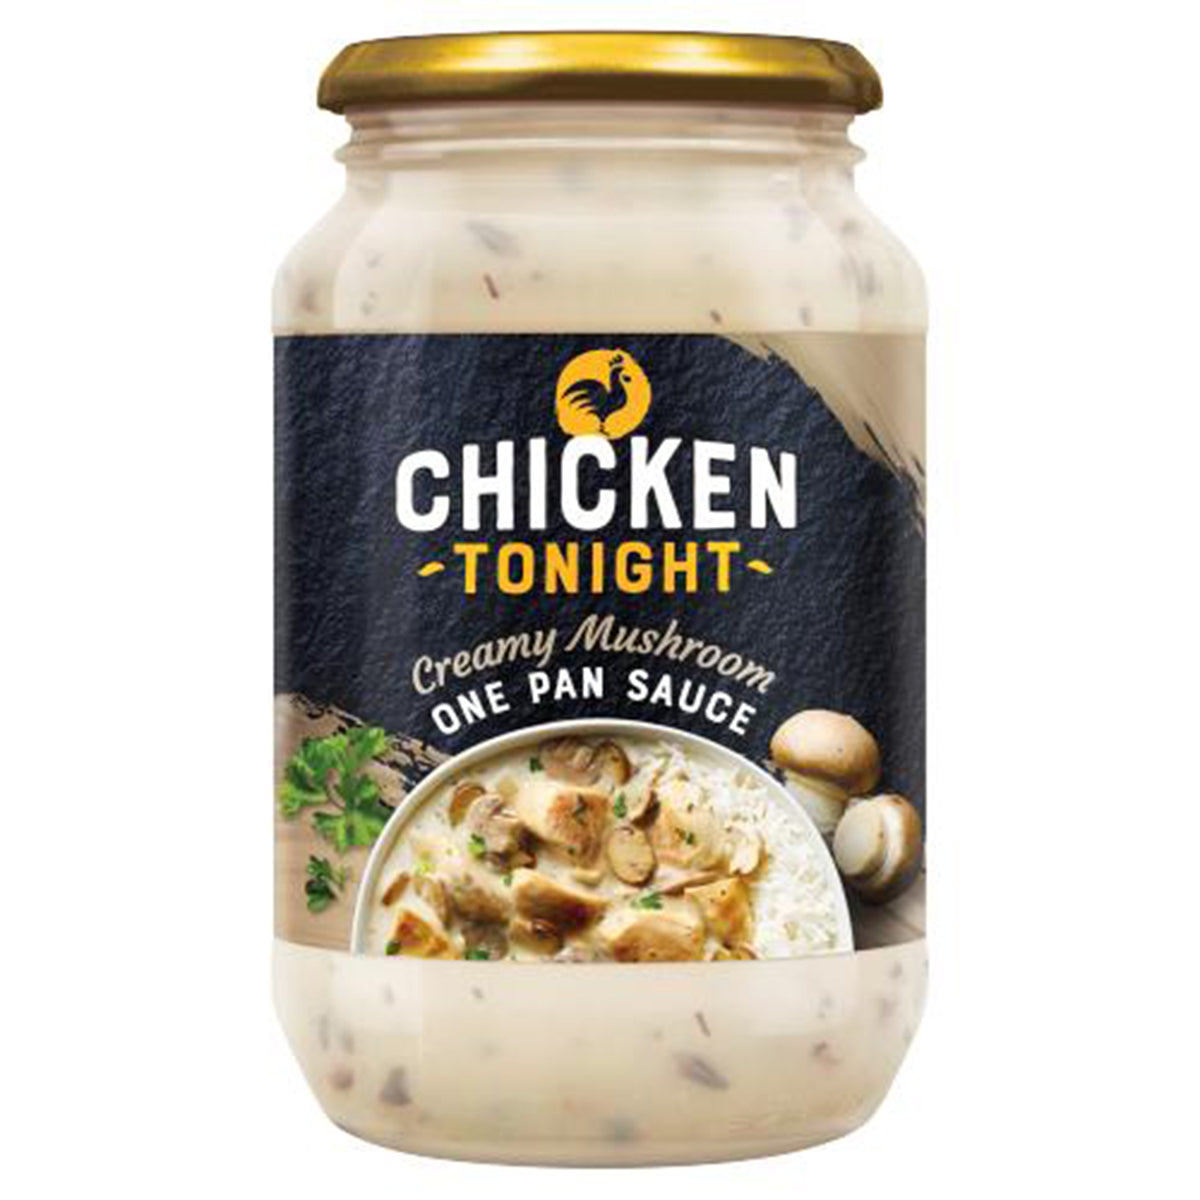 Chicken Tonight - Creamy Mushroom One Pan Sauce - 500g by Chicken Tonight.